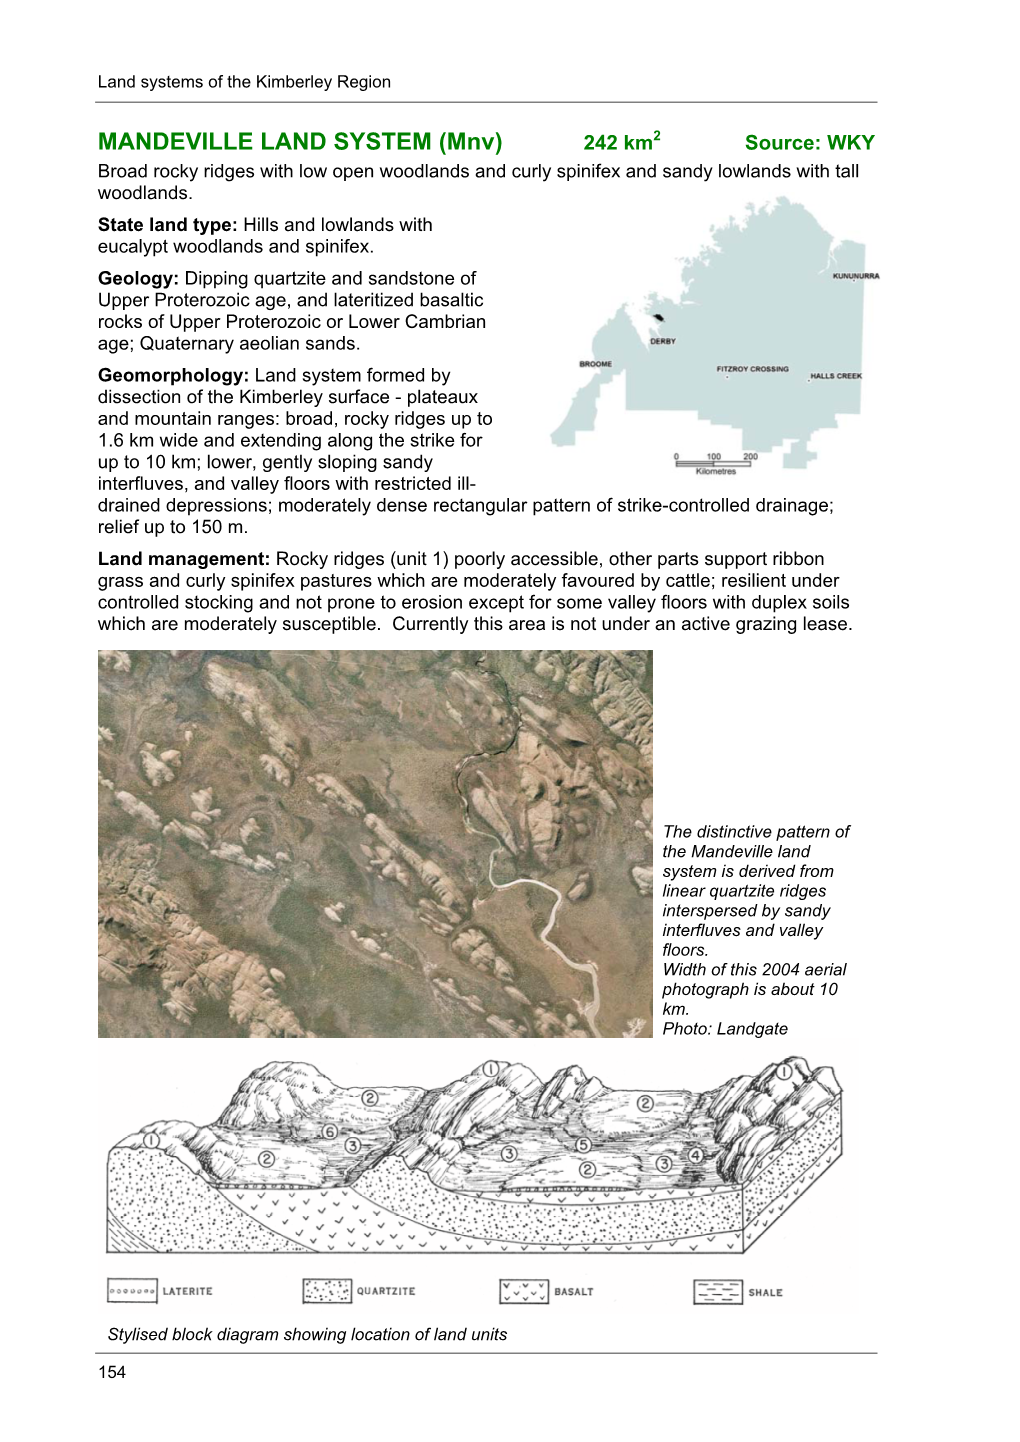 Land Systems of the Kimberley Region WA Part 6.Pdf